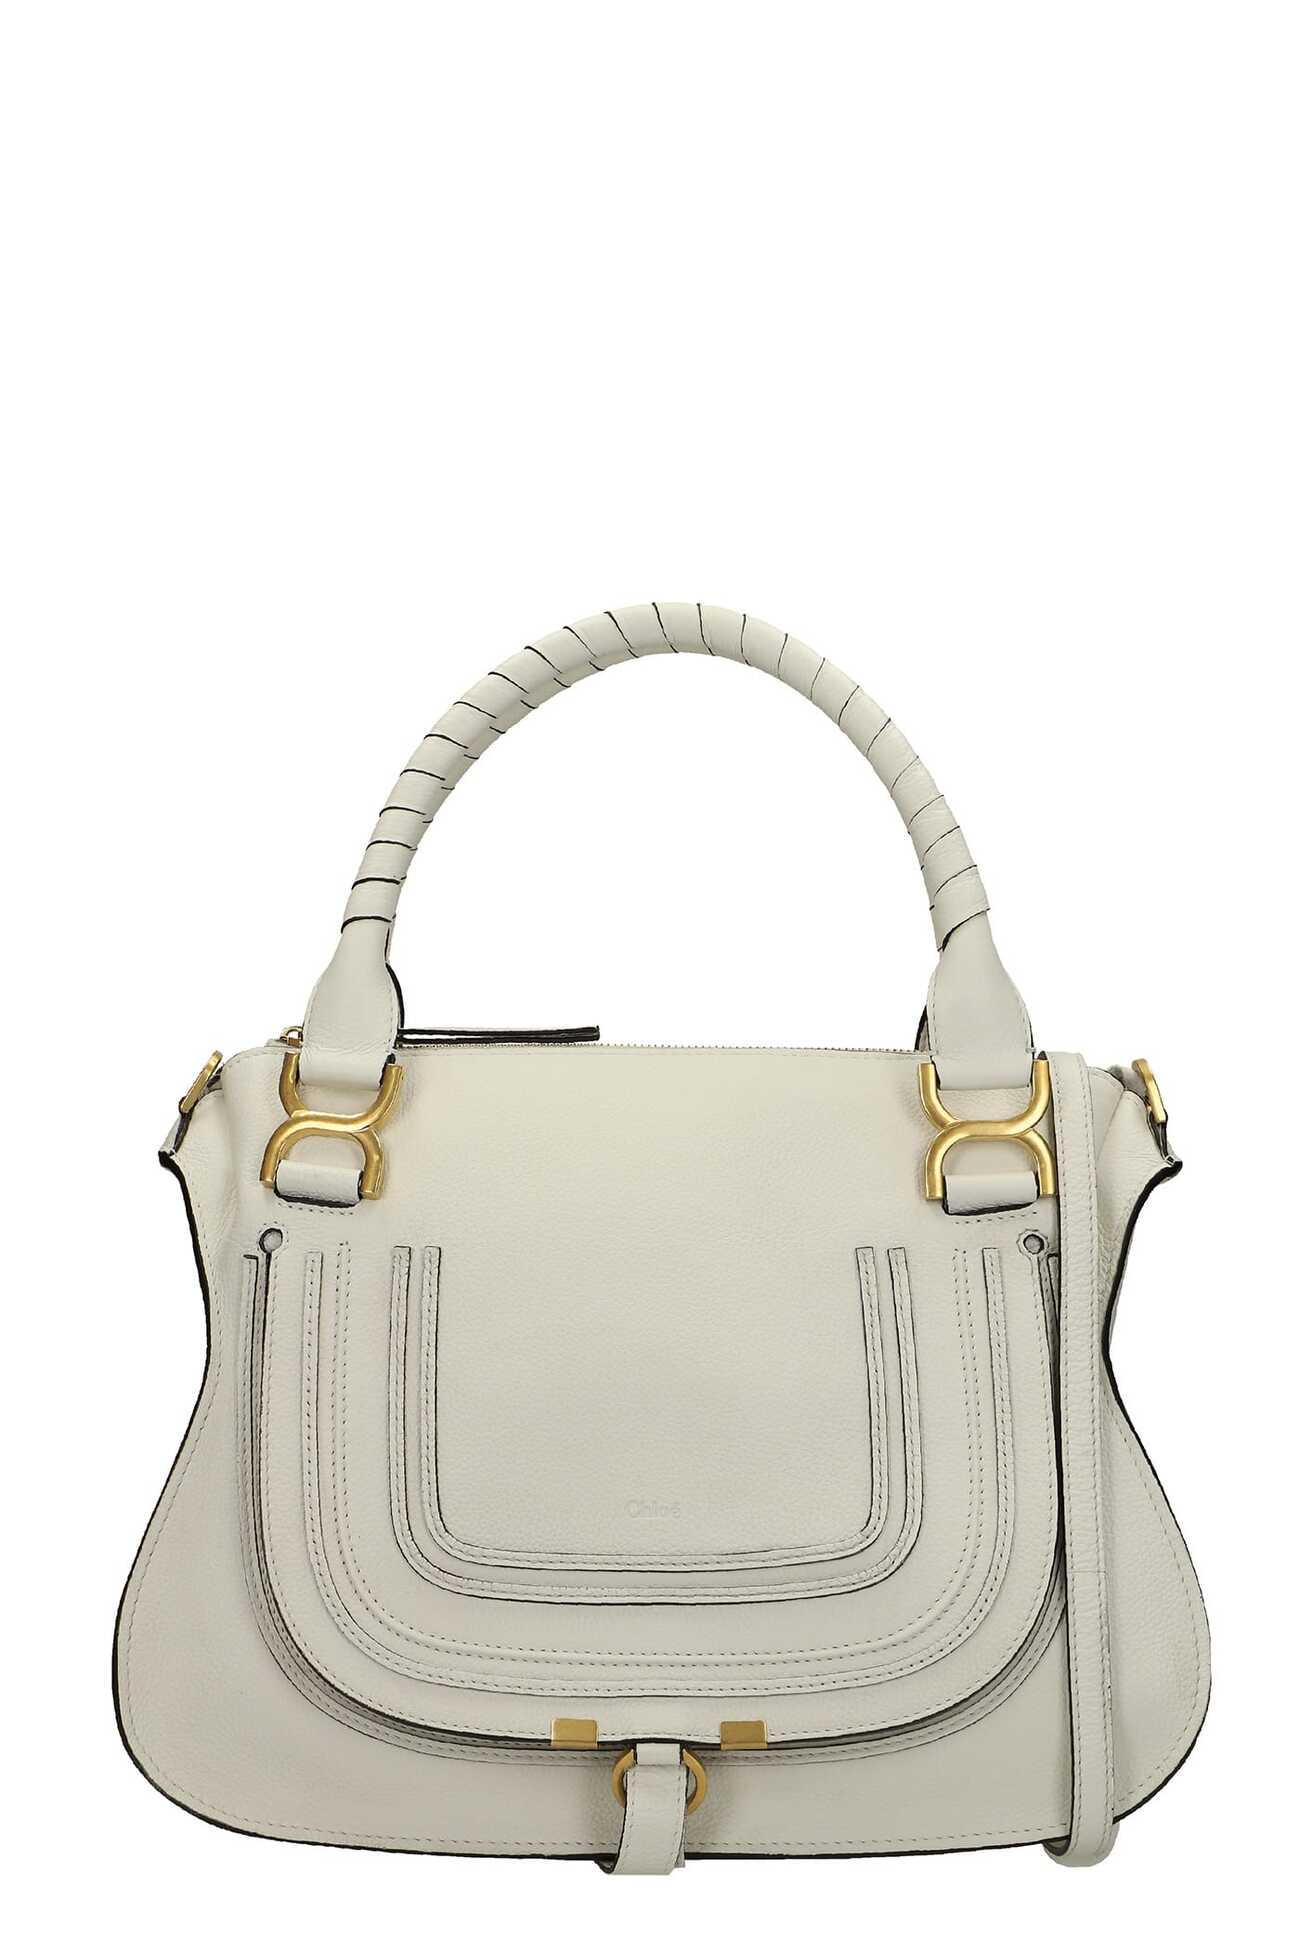 Chloé Chloé Marcie Hand Bag In White Leather